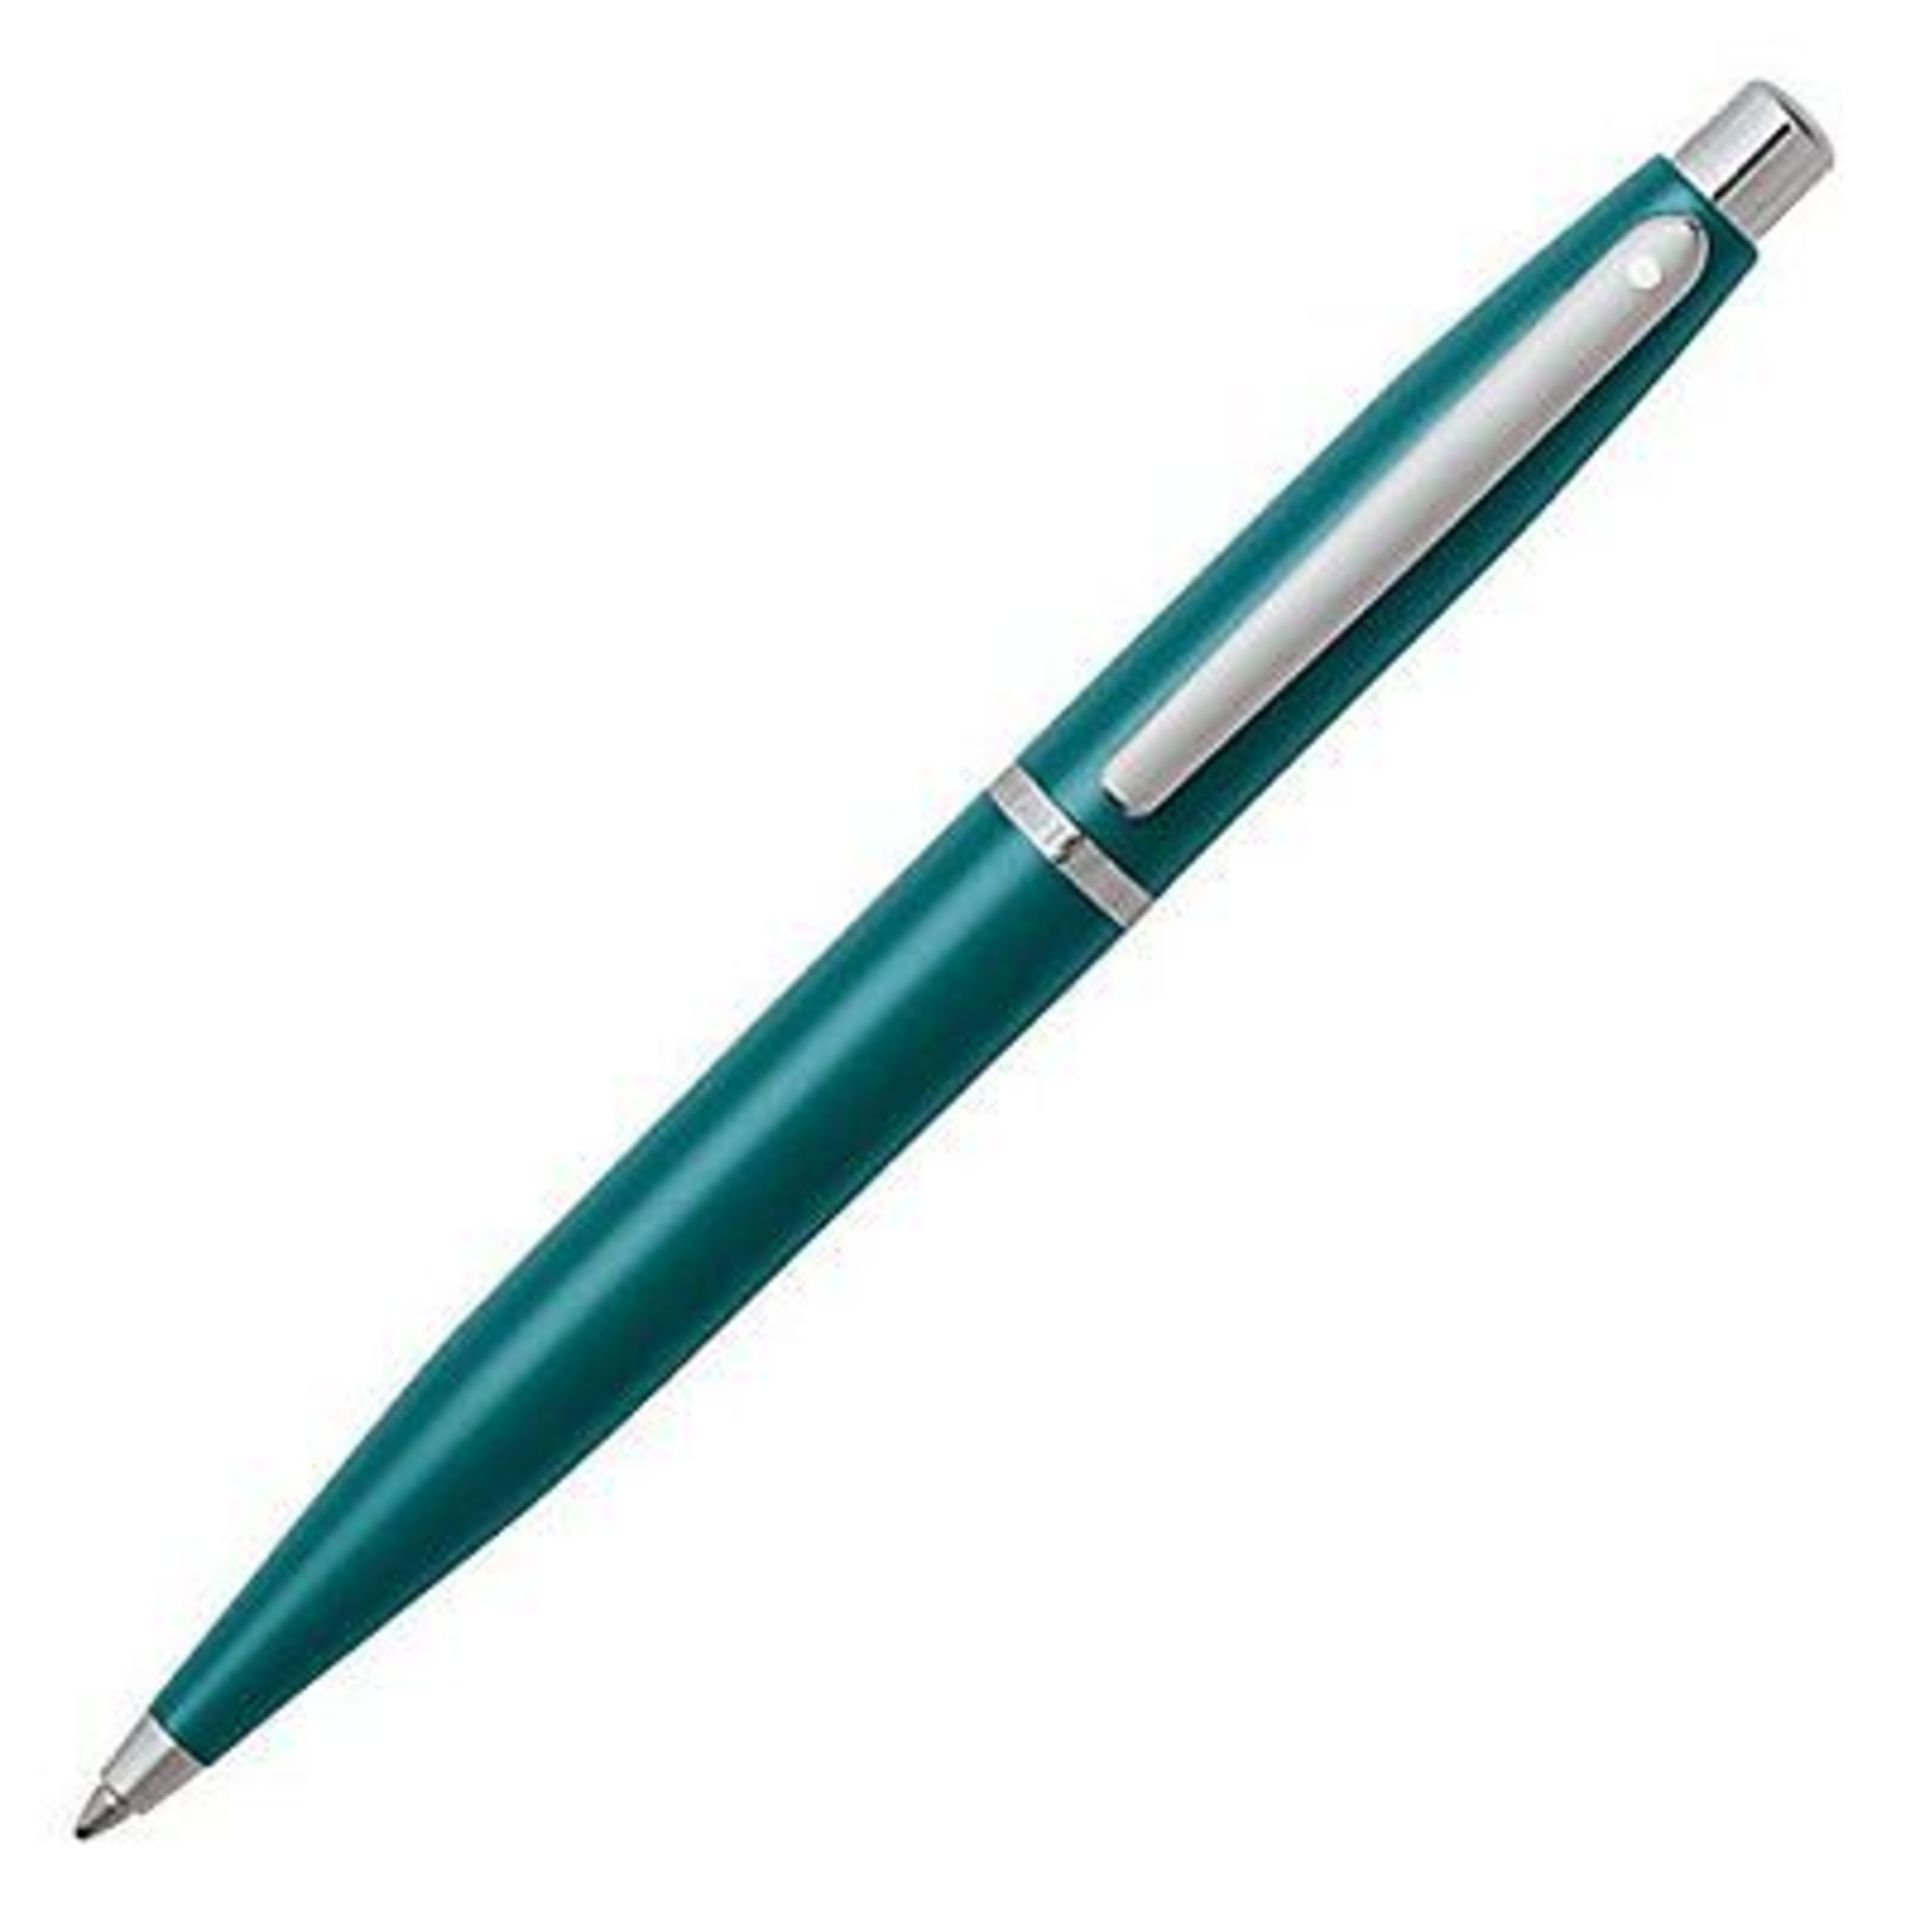 V *TRADE QTY* Brand New Sheaffer Vfm Series Ballpoint Pen Ultra Mint eBay Price £18.76 X 4 YOUR